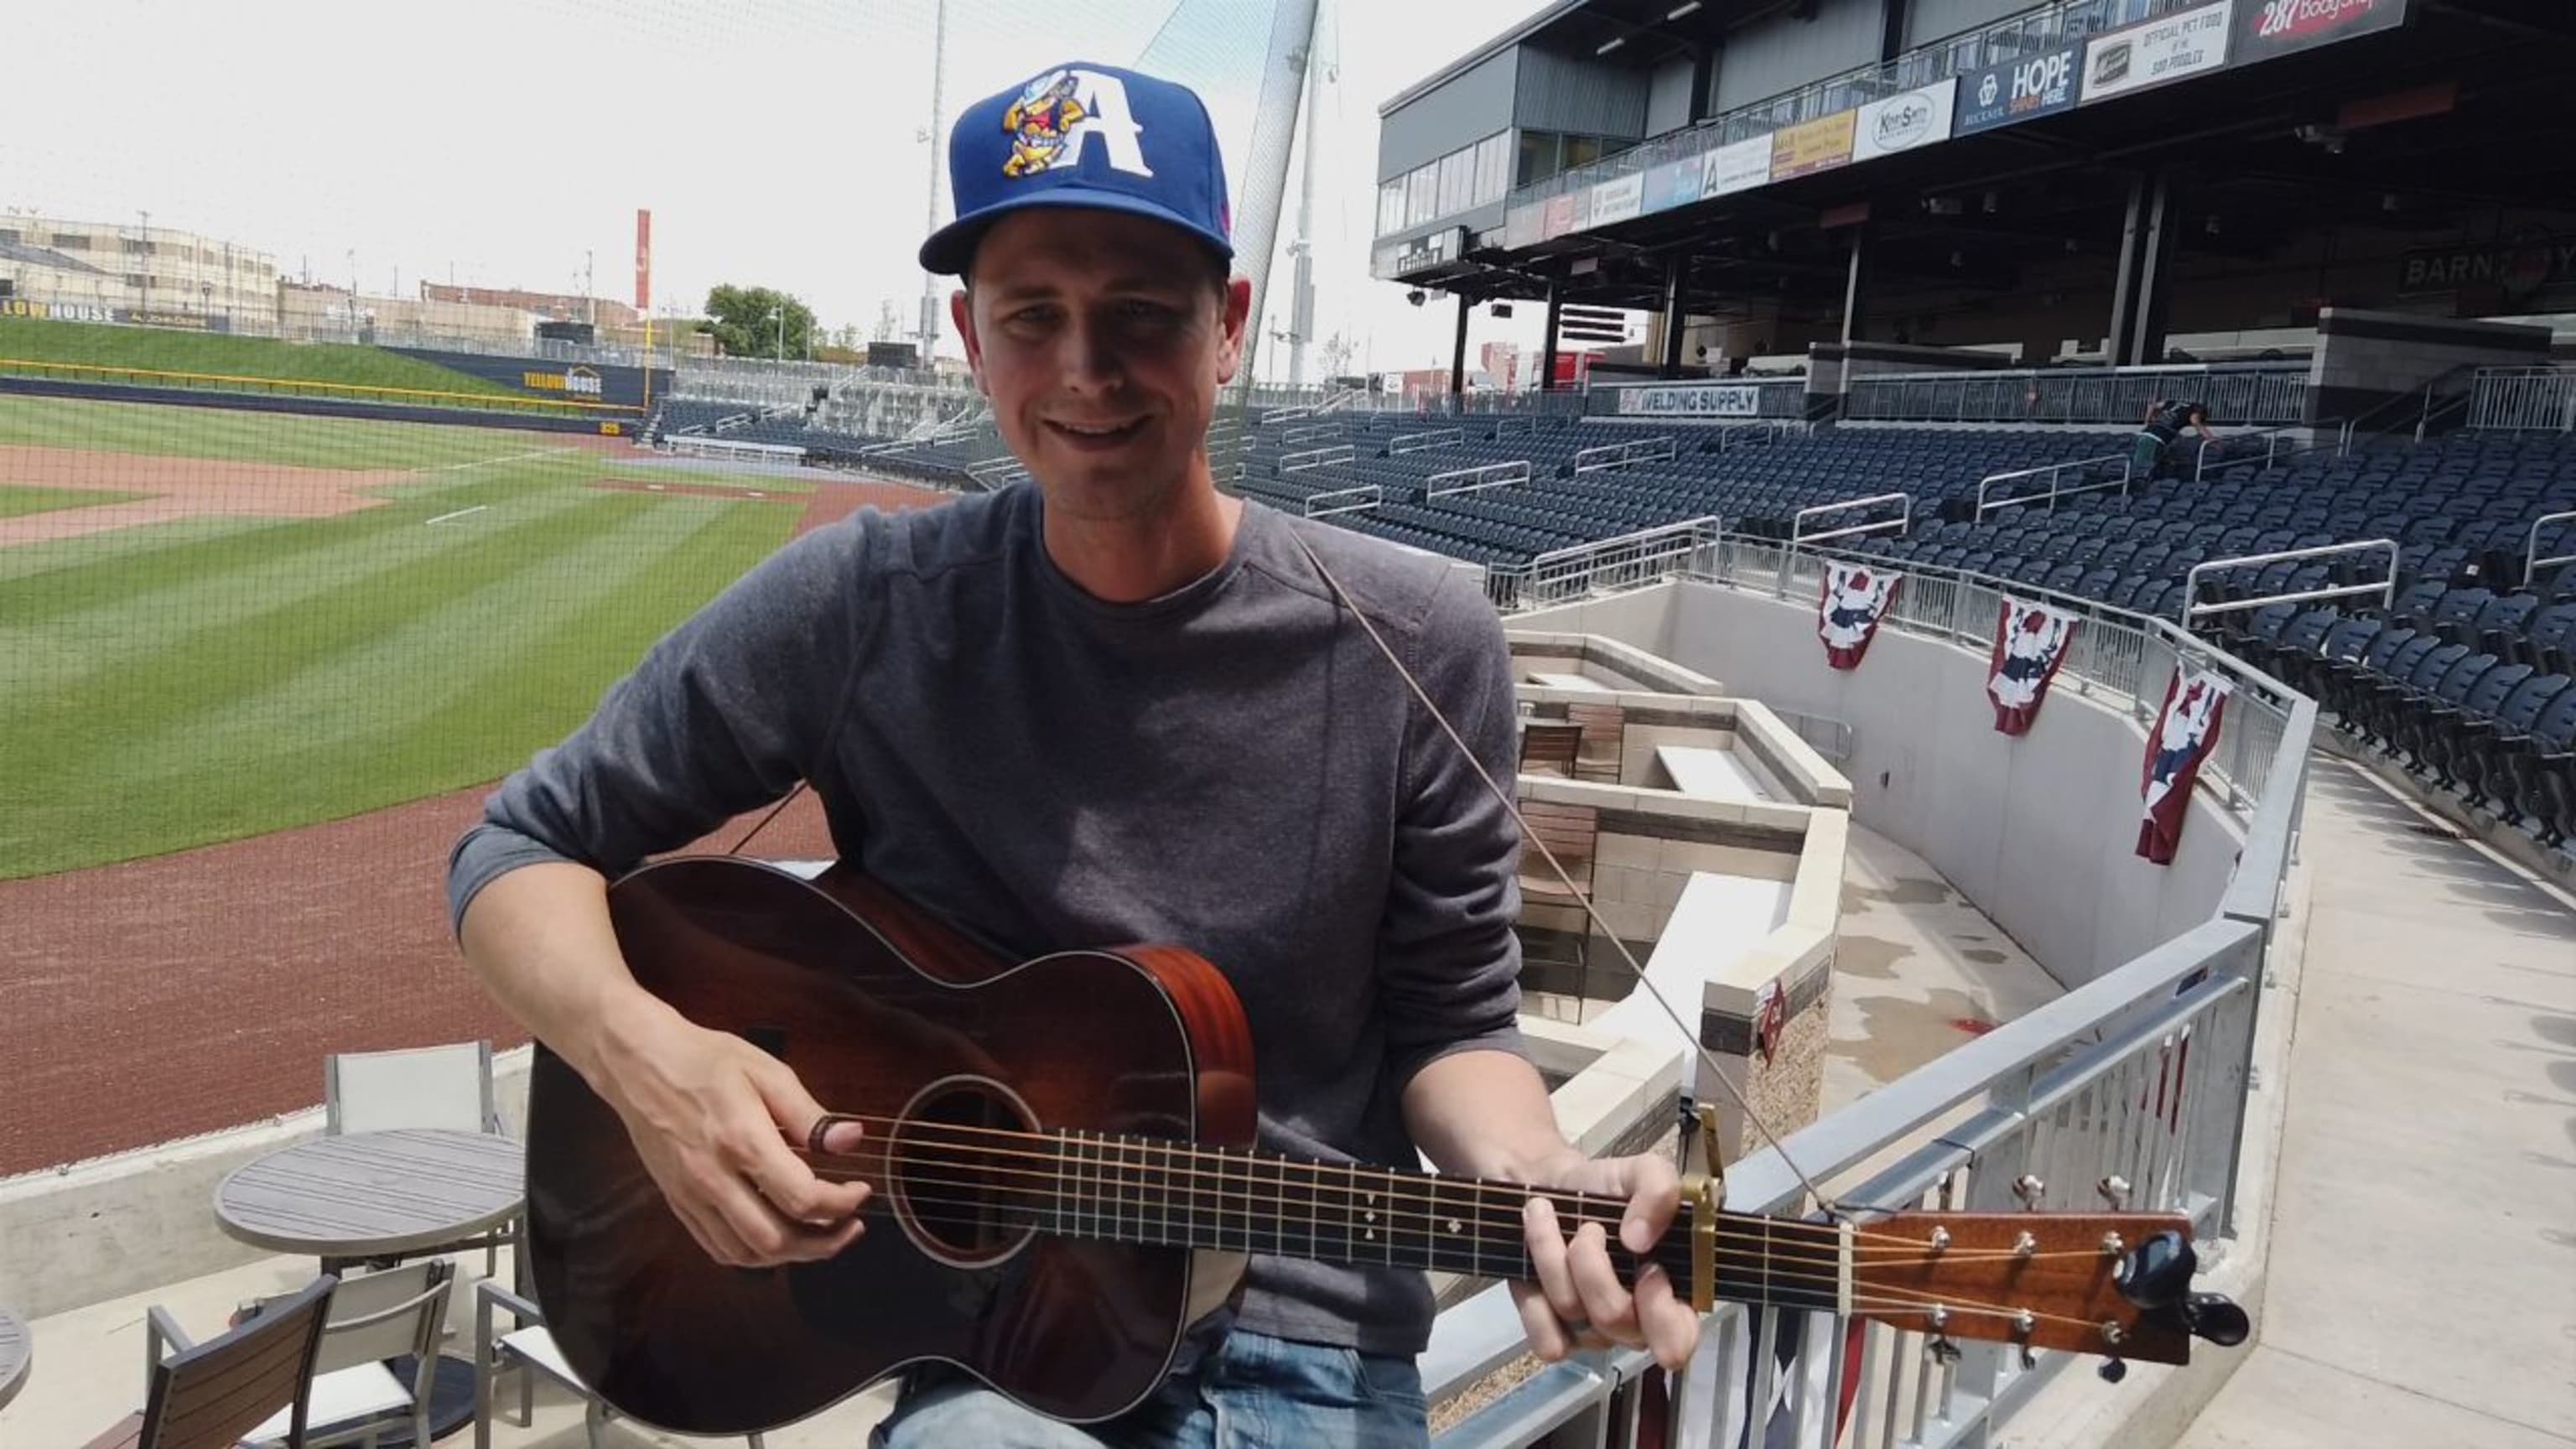 Let's Go Mets!' Inside the Baseball Anthem That Won't Die